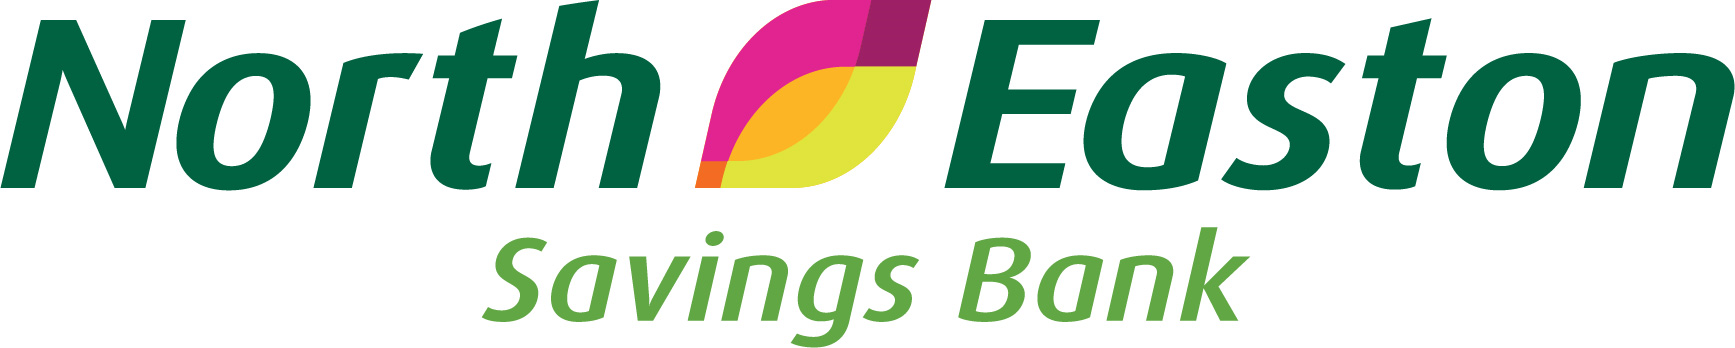 North Easton Savings Bank Company Logo